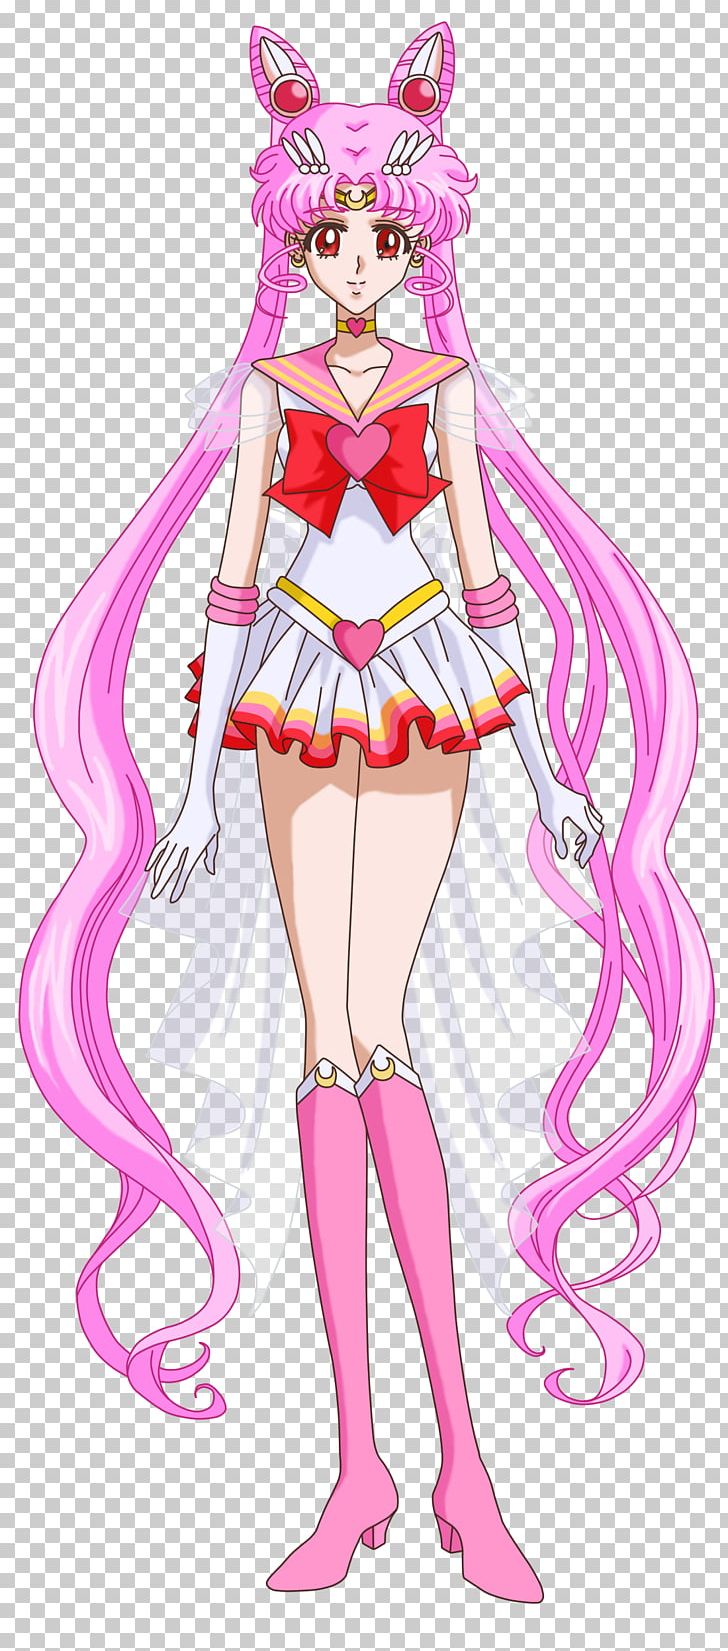 Chibiusa Sailor Moon Tuxedo Mask ChibiChibi PNG, Clipart, Anime, Art, Cartoon, Character, Chibi Free PNG Download